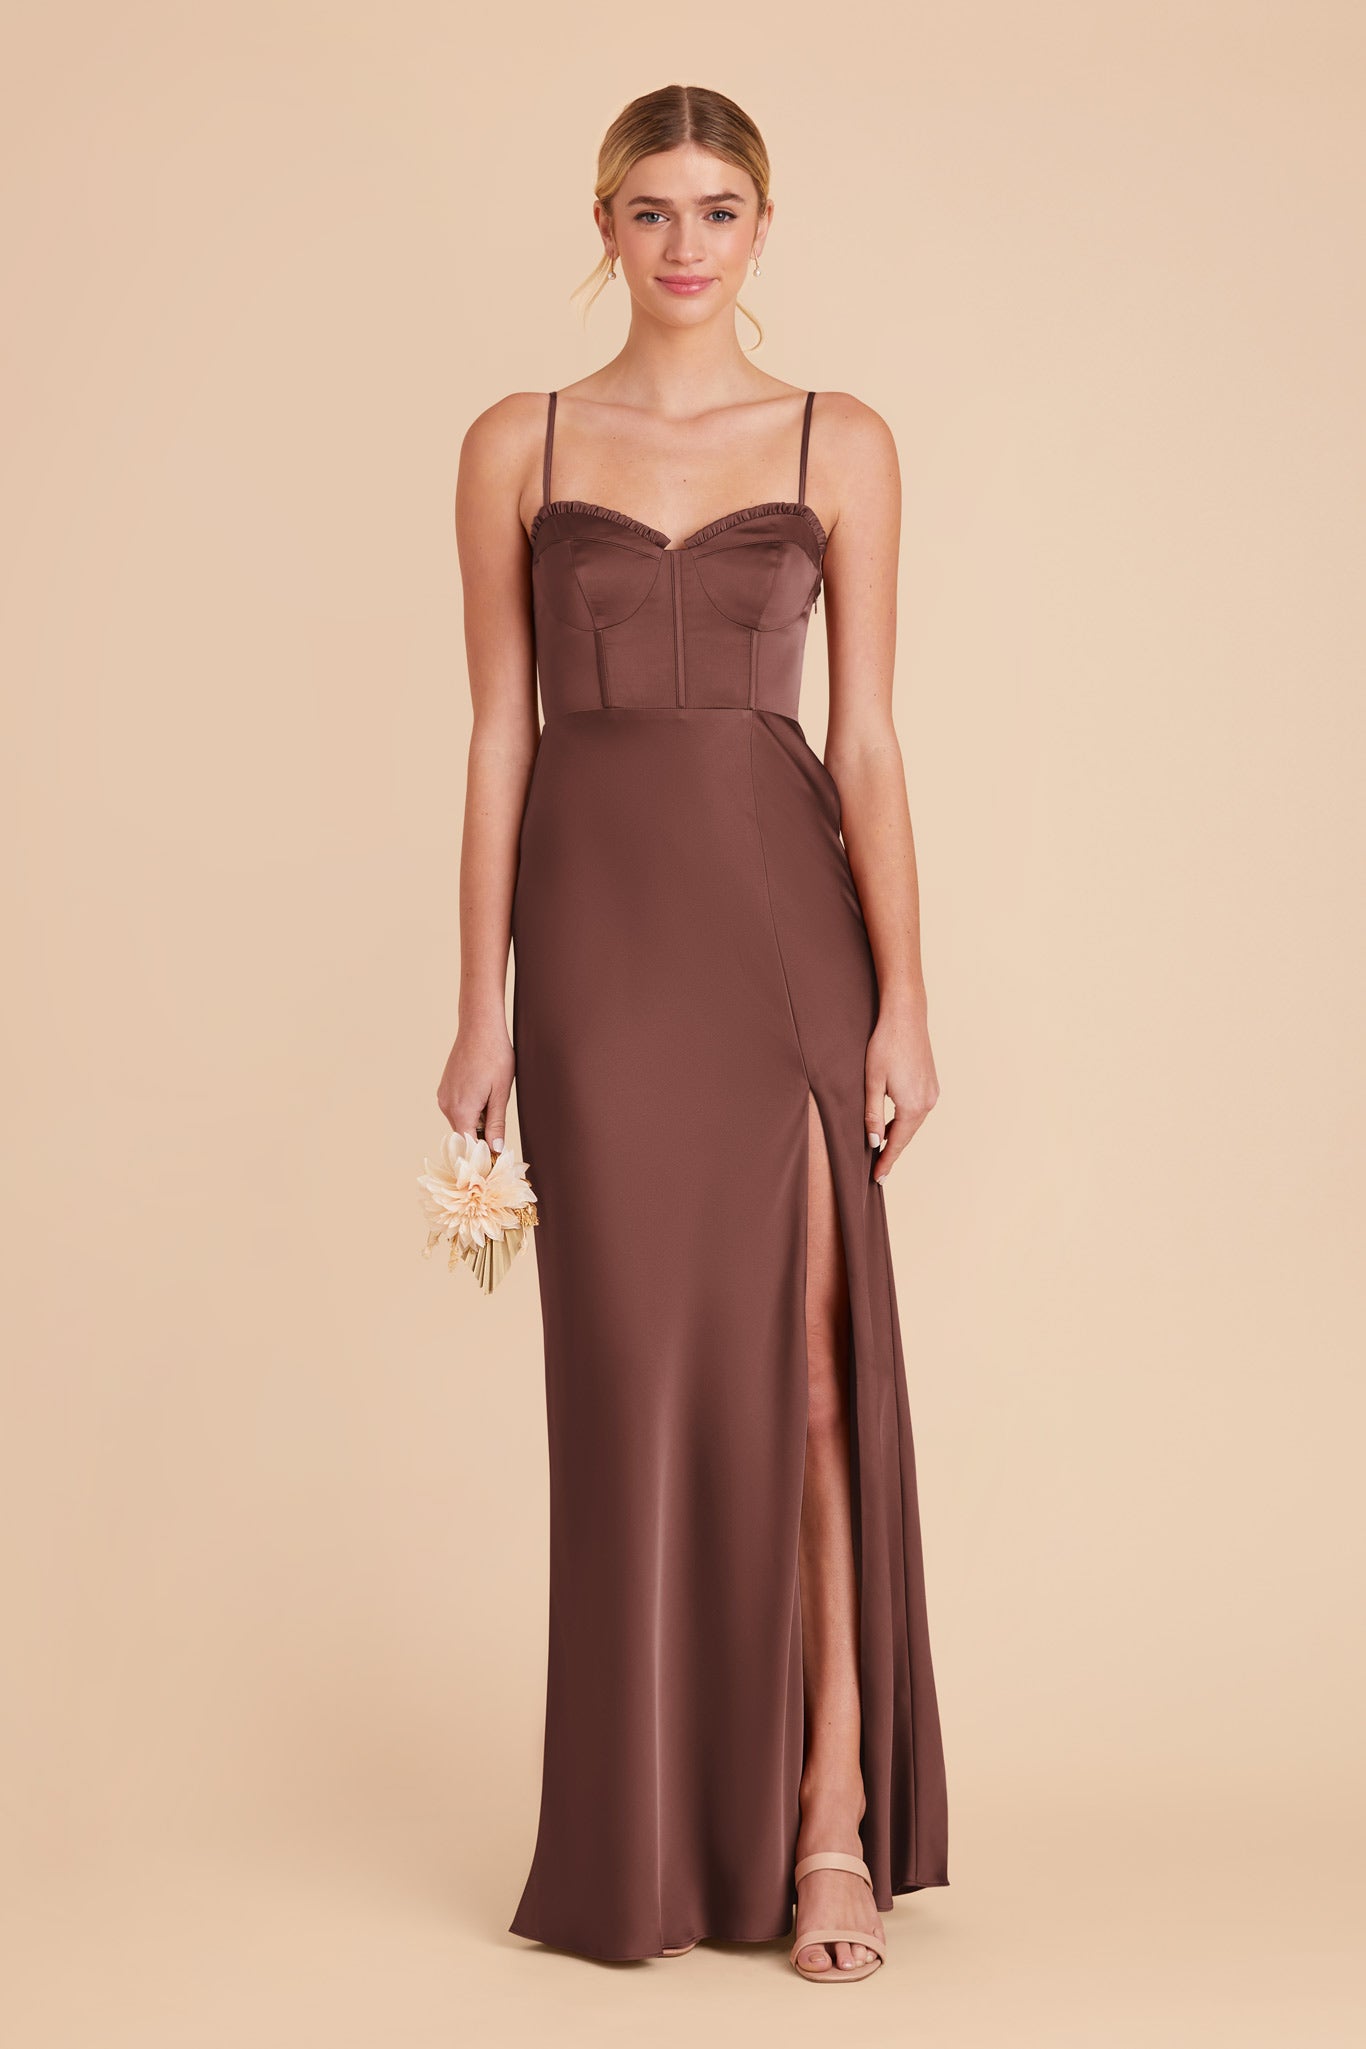 Chocolate Brown Jessica Matte Satin Dress by Birdy Grey